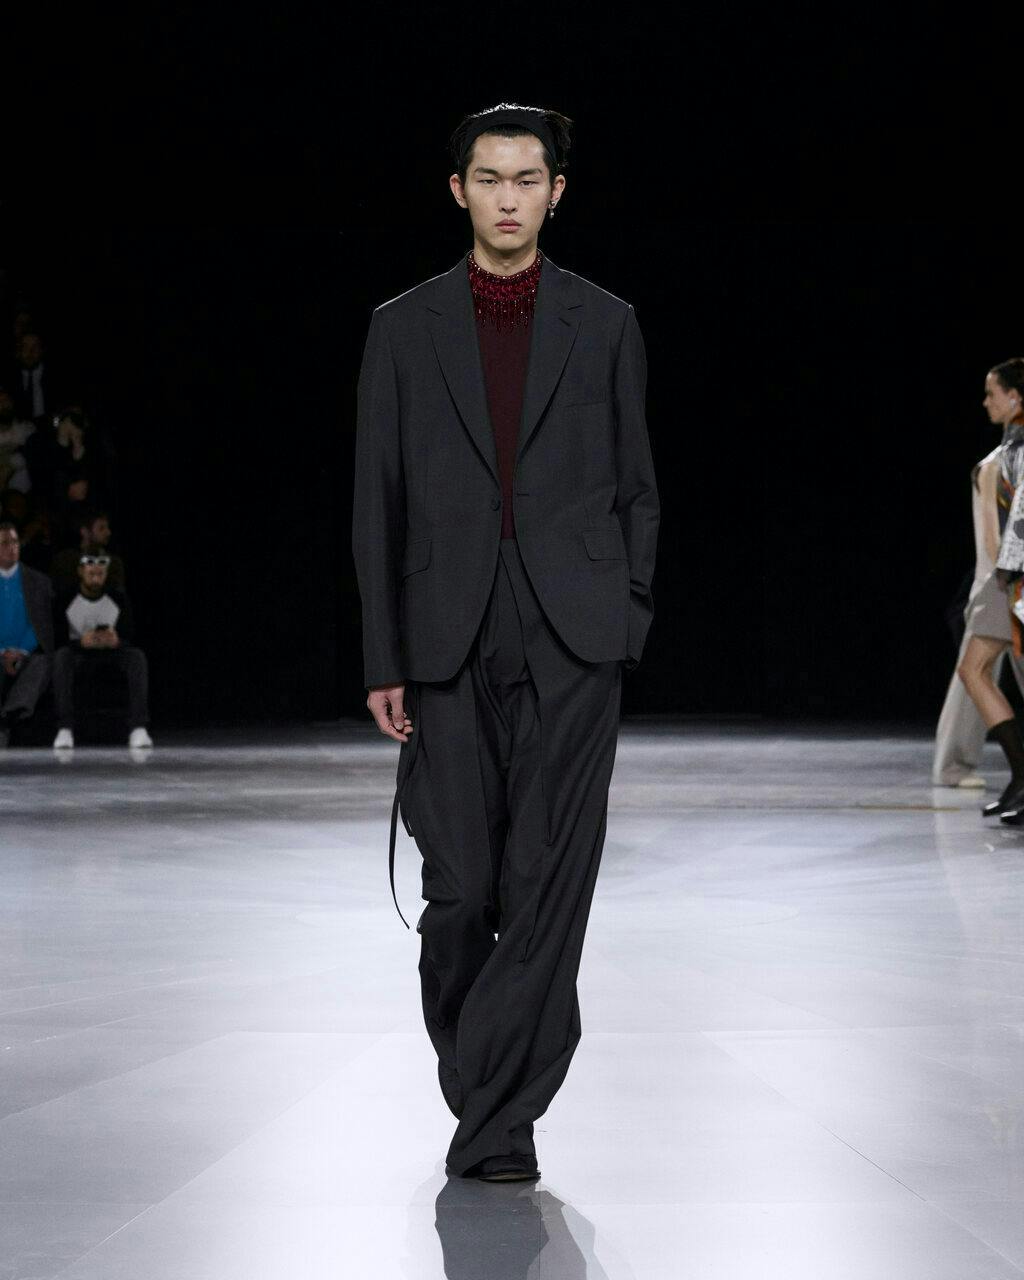 fashion formal wear suit adult male man person shoe coat runway